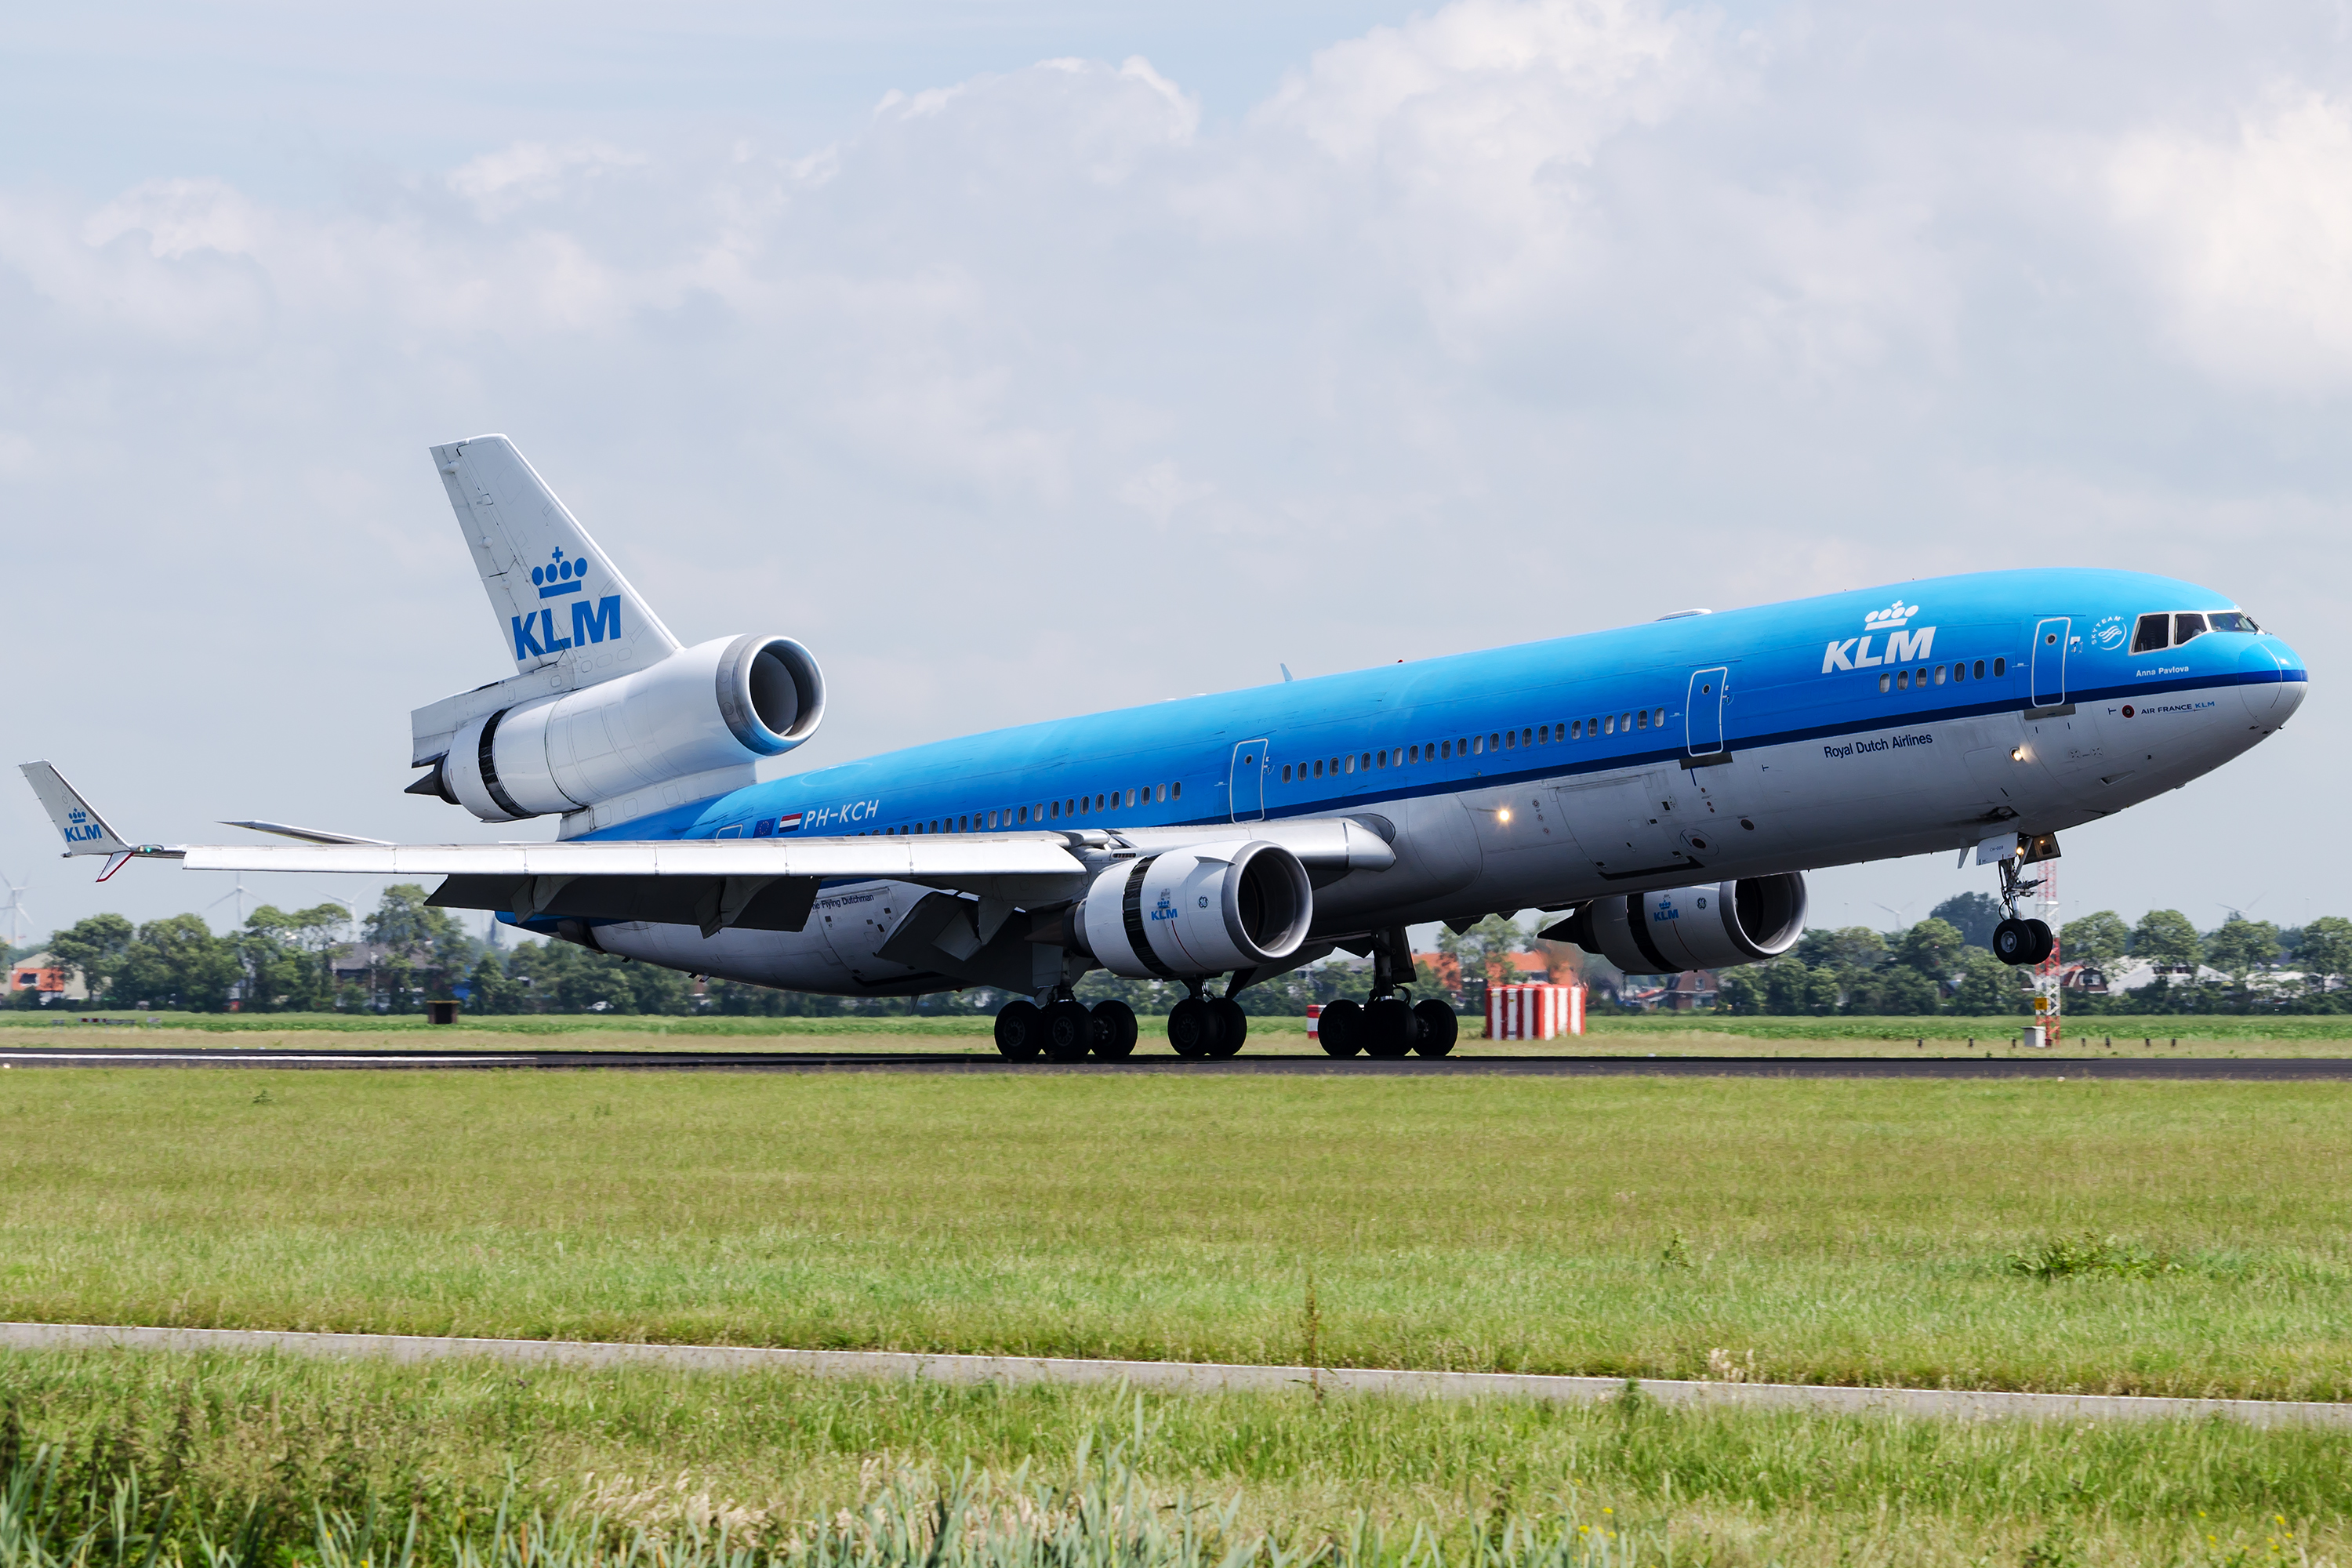 KLM's retired McDonnell Douglas MD-11